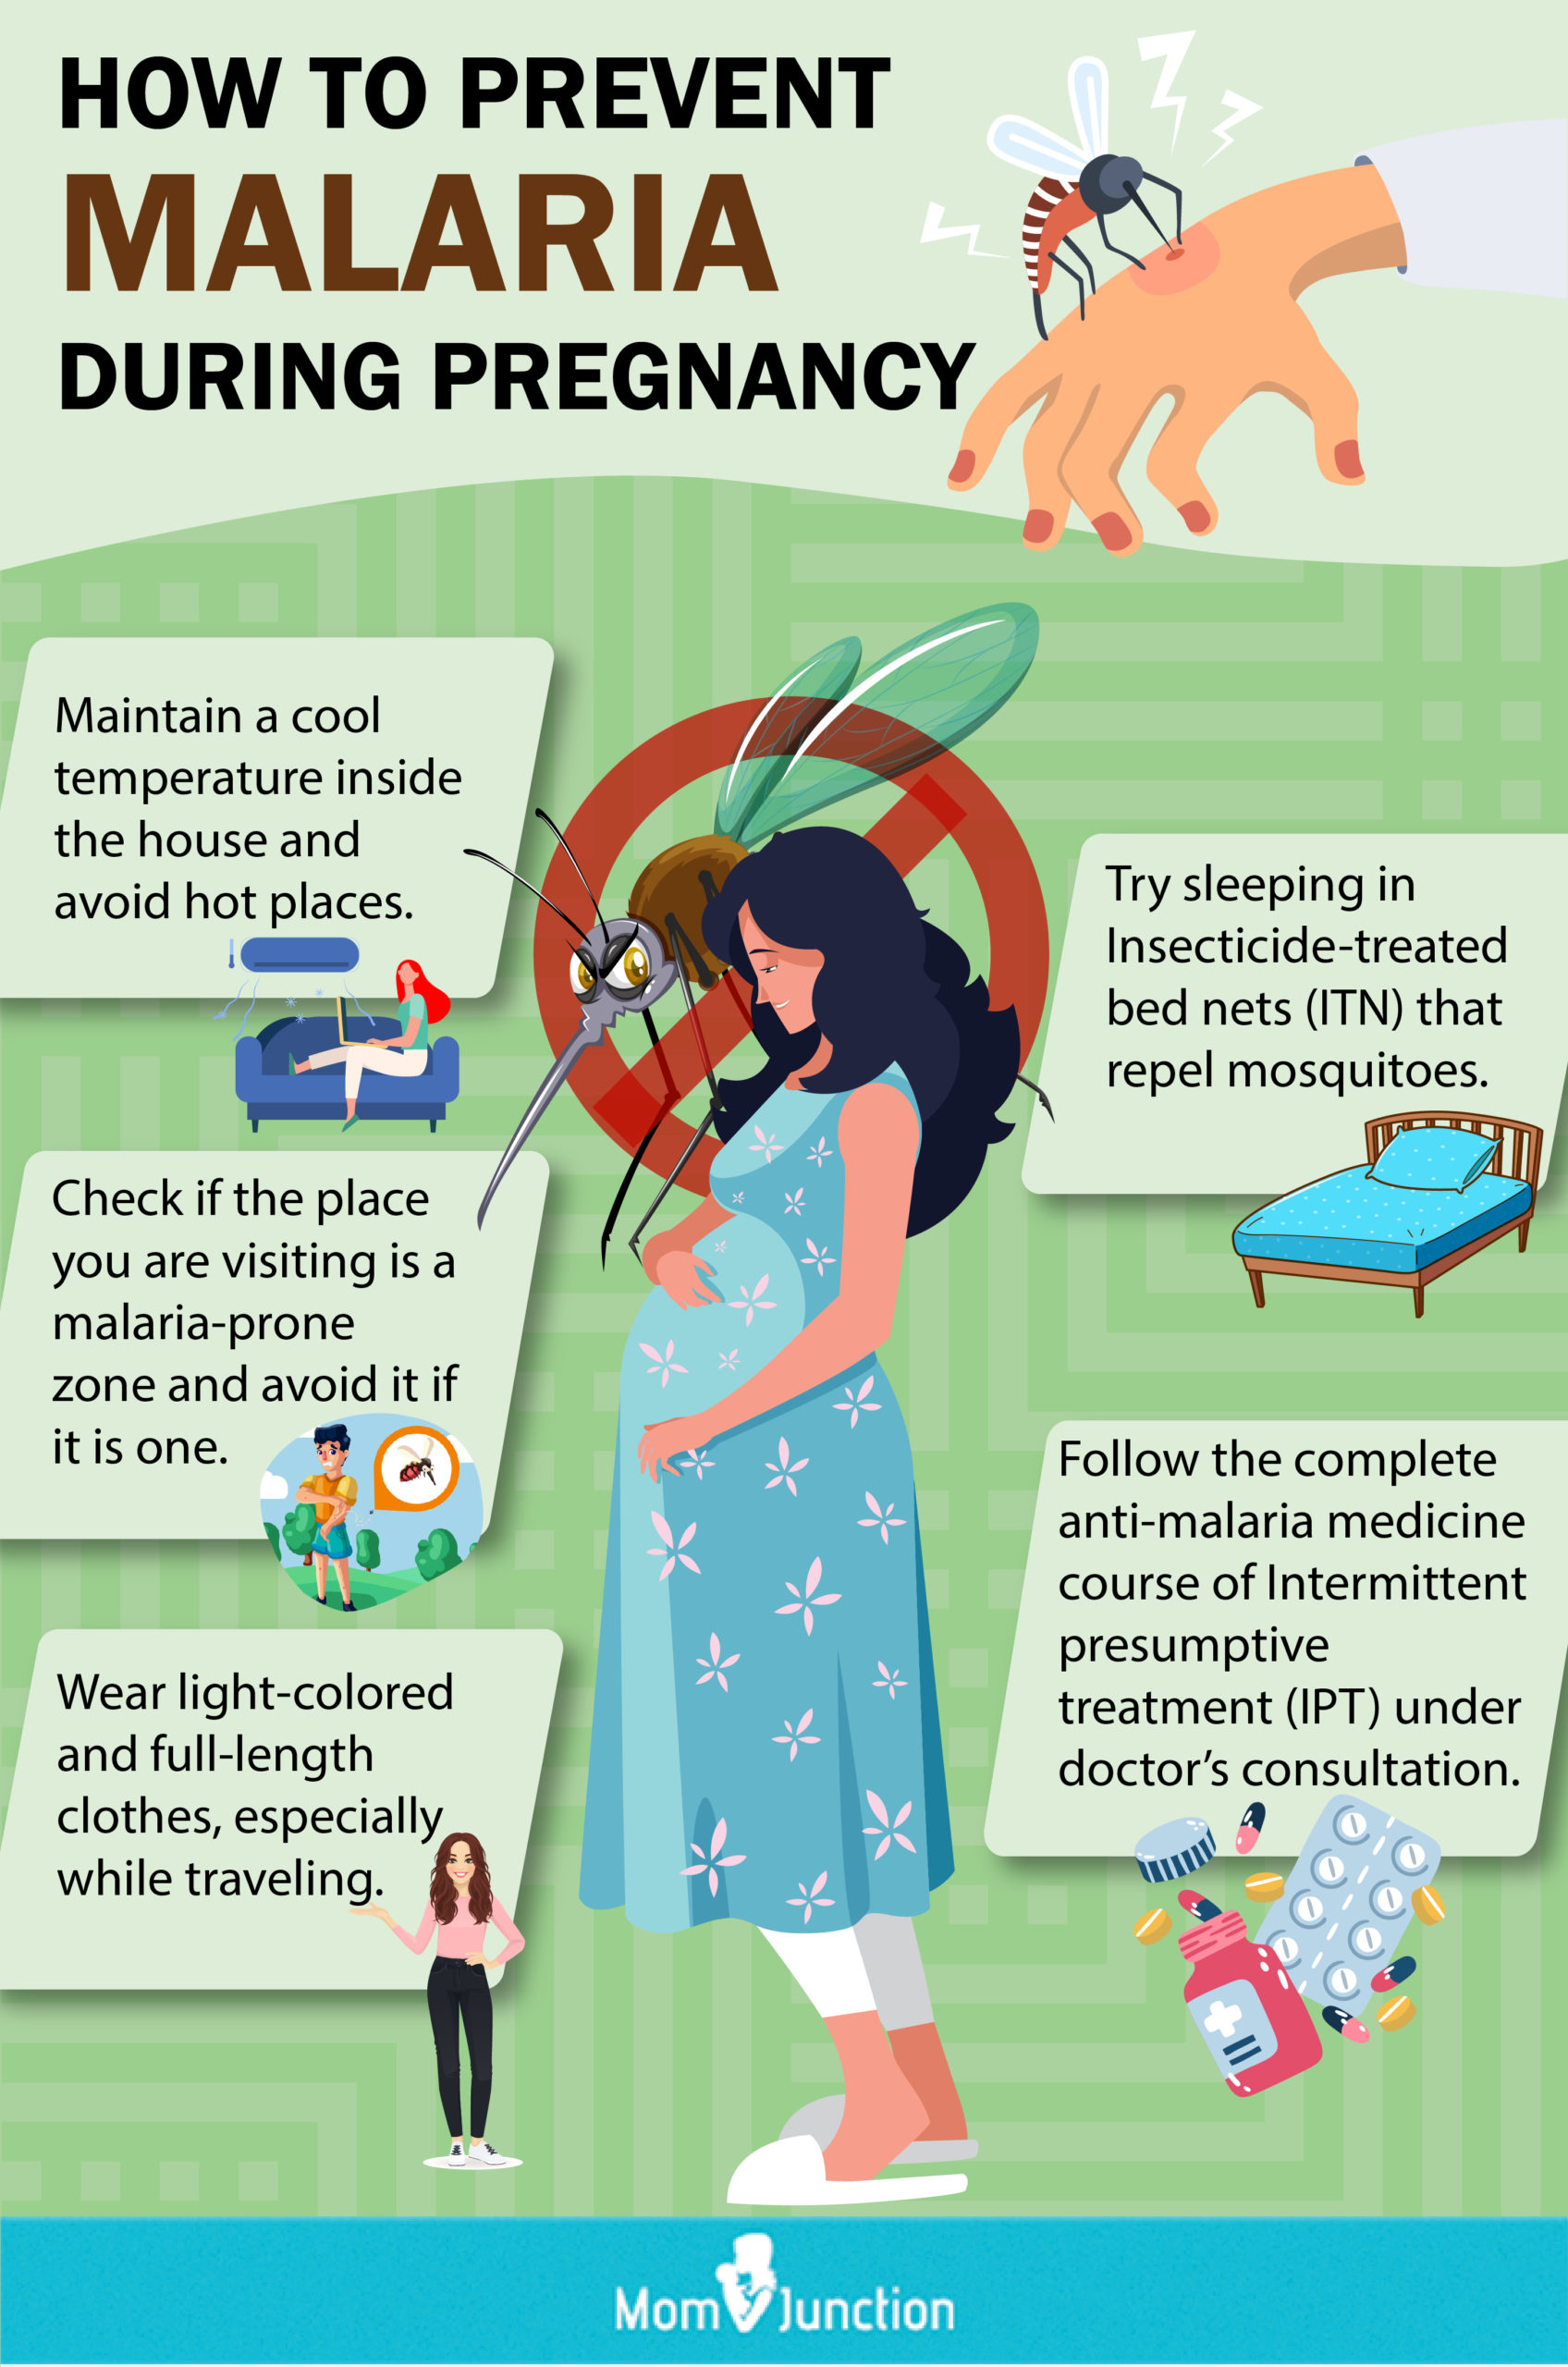 tips on preventing malaria in pregnancy (infographic)